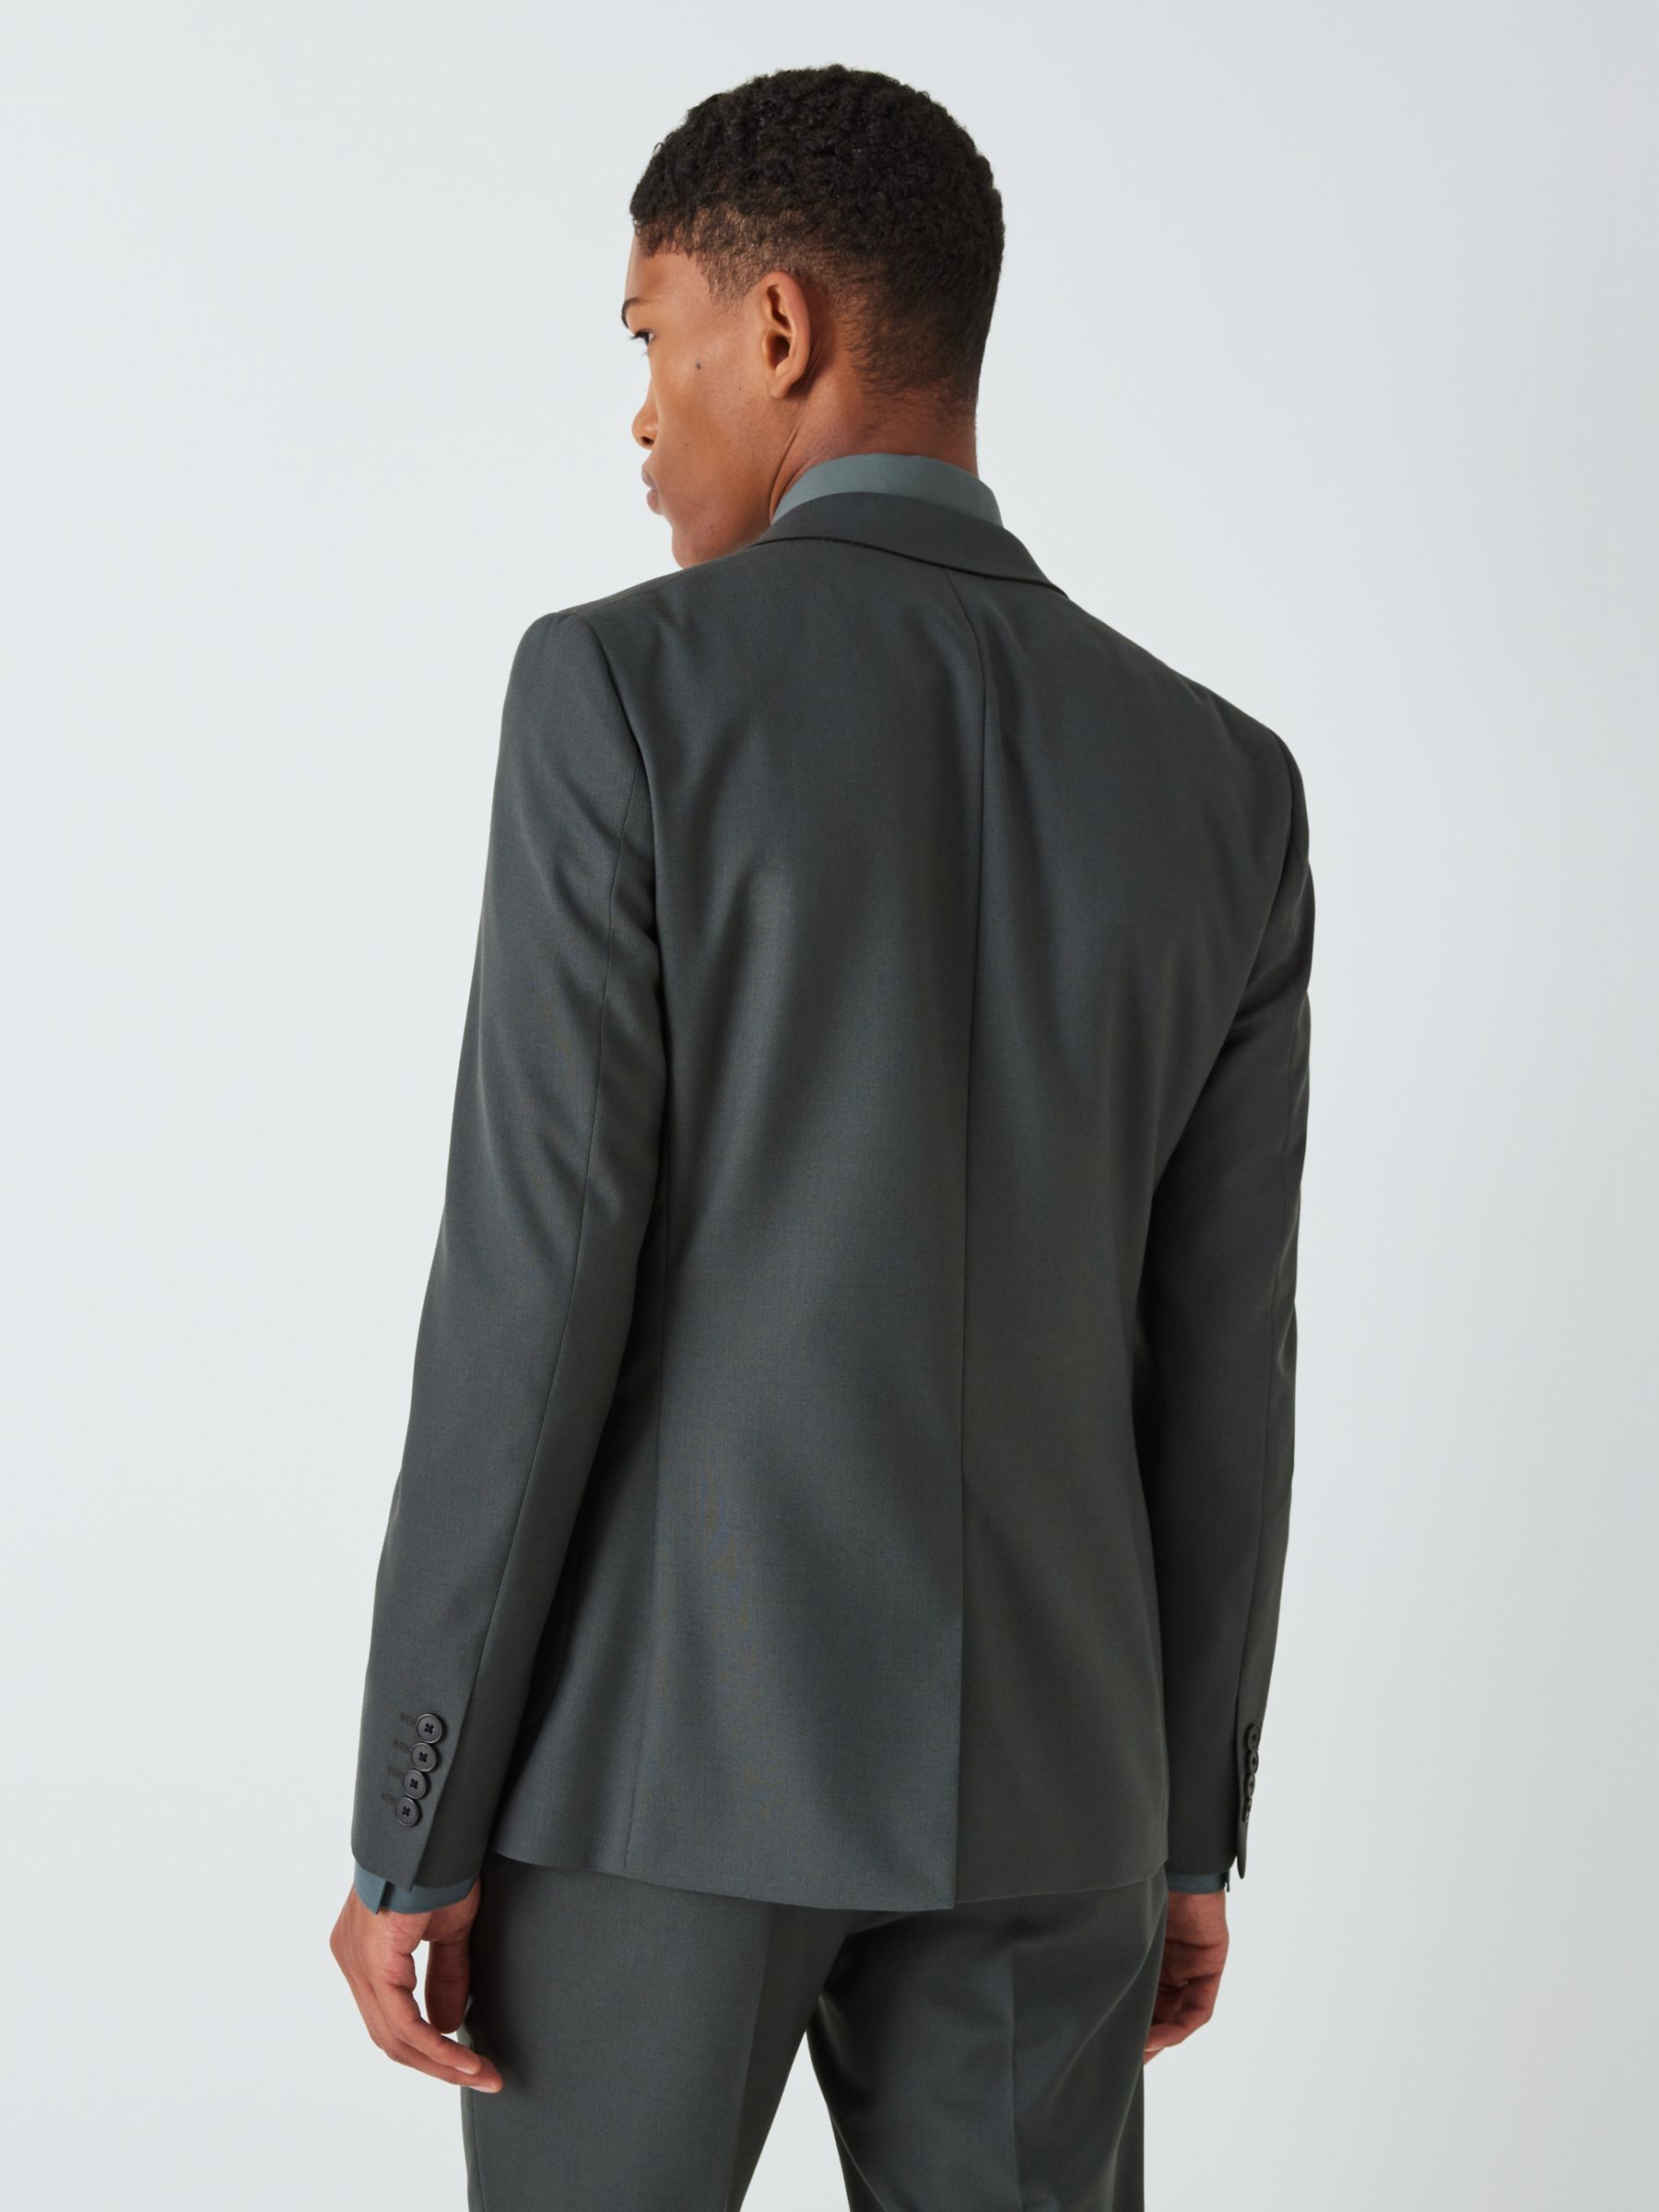 Kin Wool Blend Slim Suit Jacket, Green at John Lewis & Partners